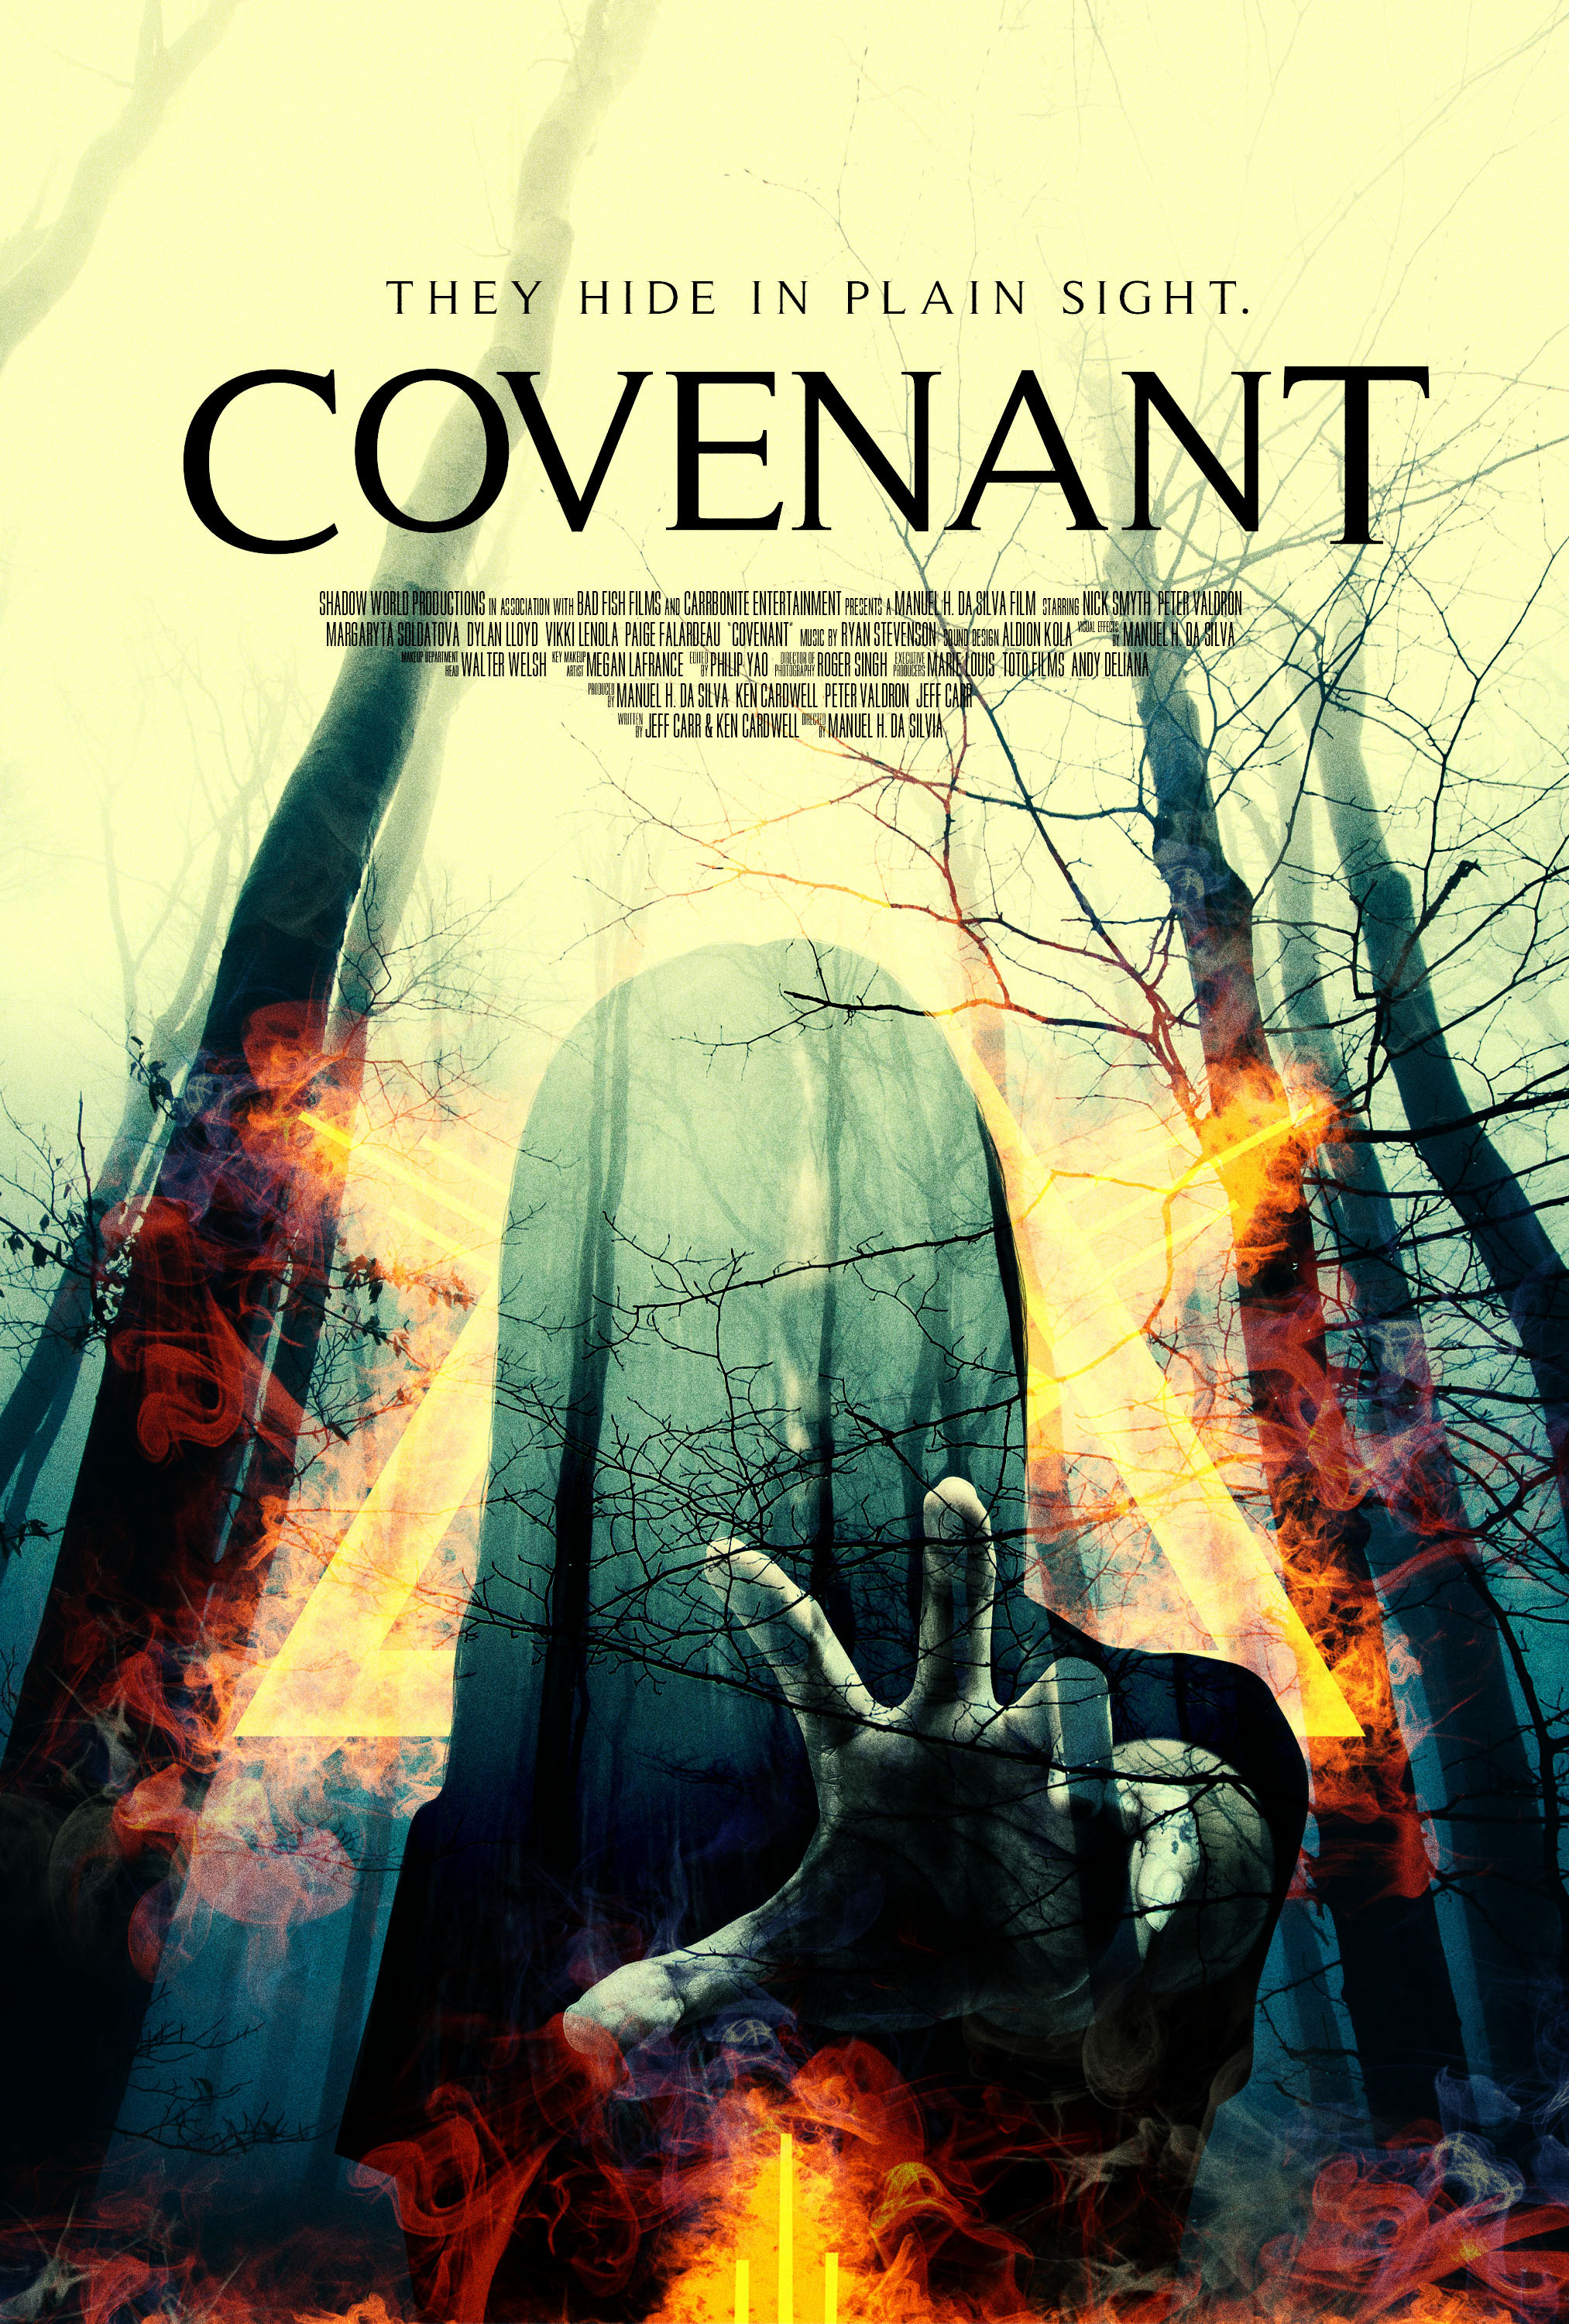 Mega Sized Movie Poster Image for Covenant (#2 of 3)